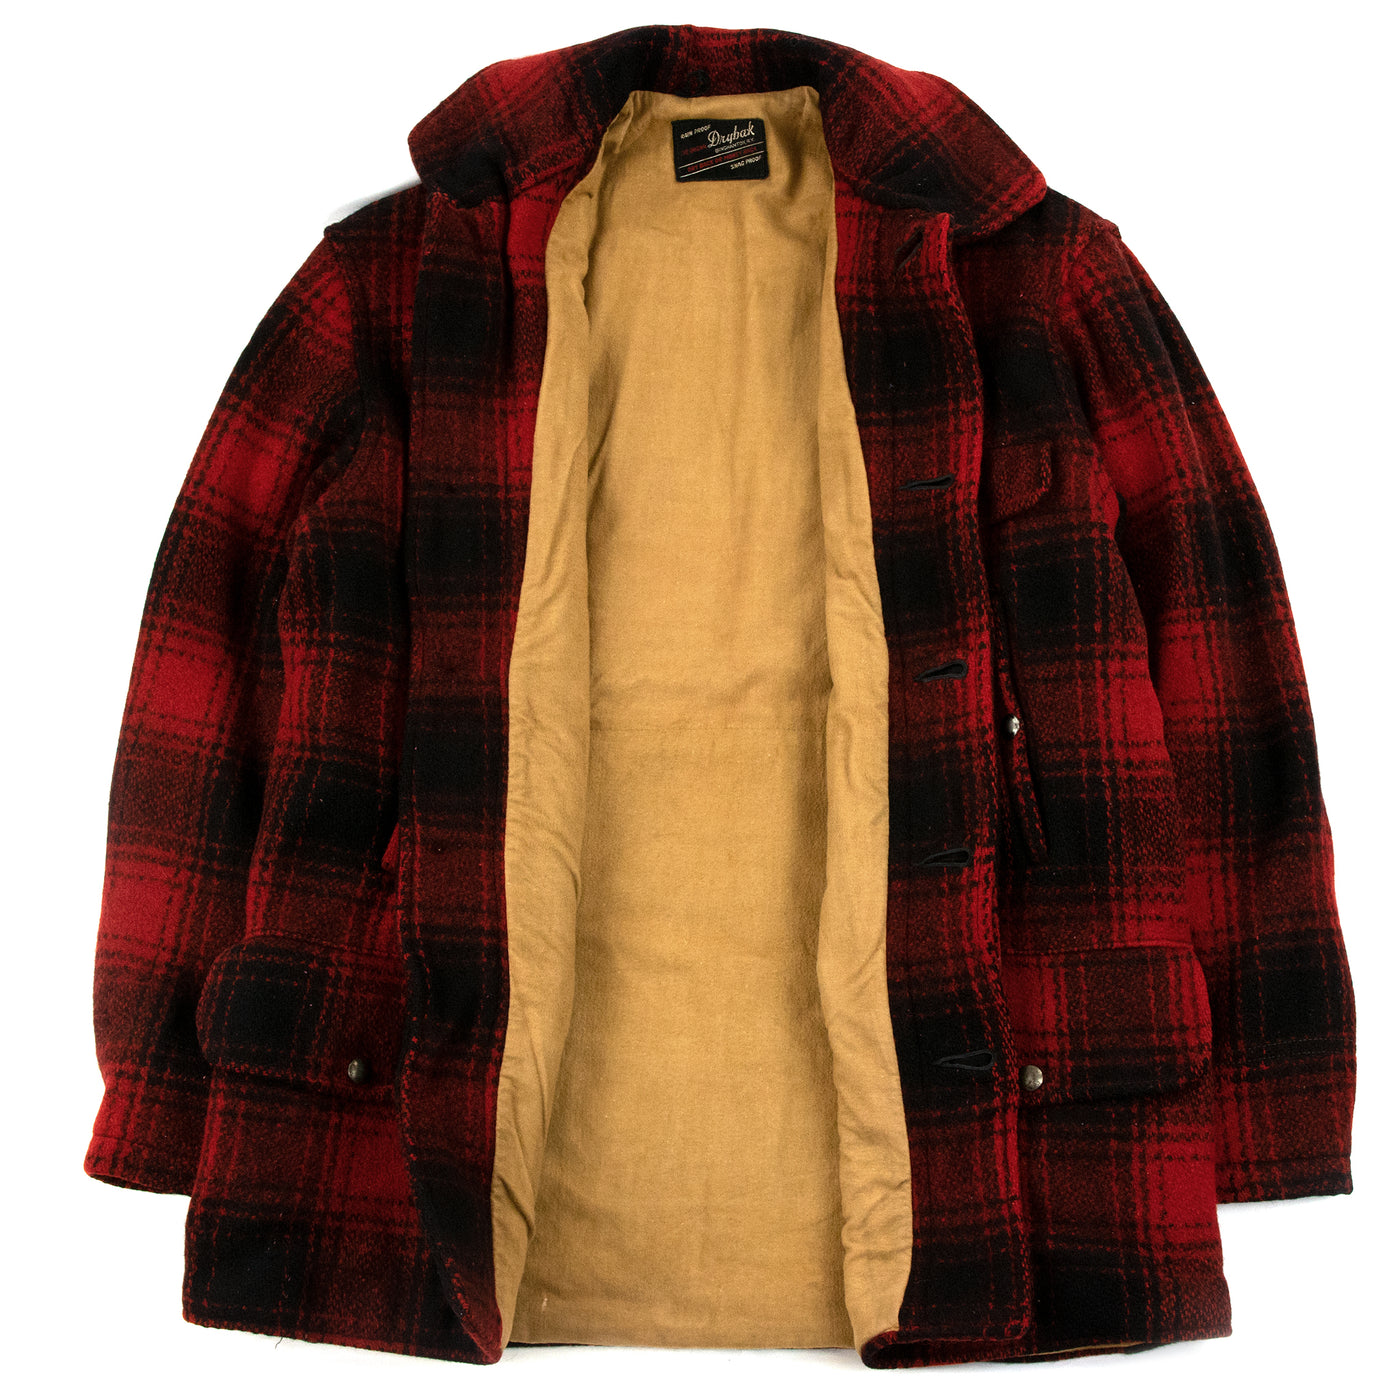 Vintage 1950's Drybak Wool Hunting Plaid Mackinaw Jacket Made In U.S.A - M